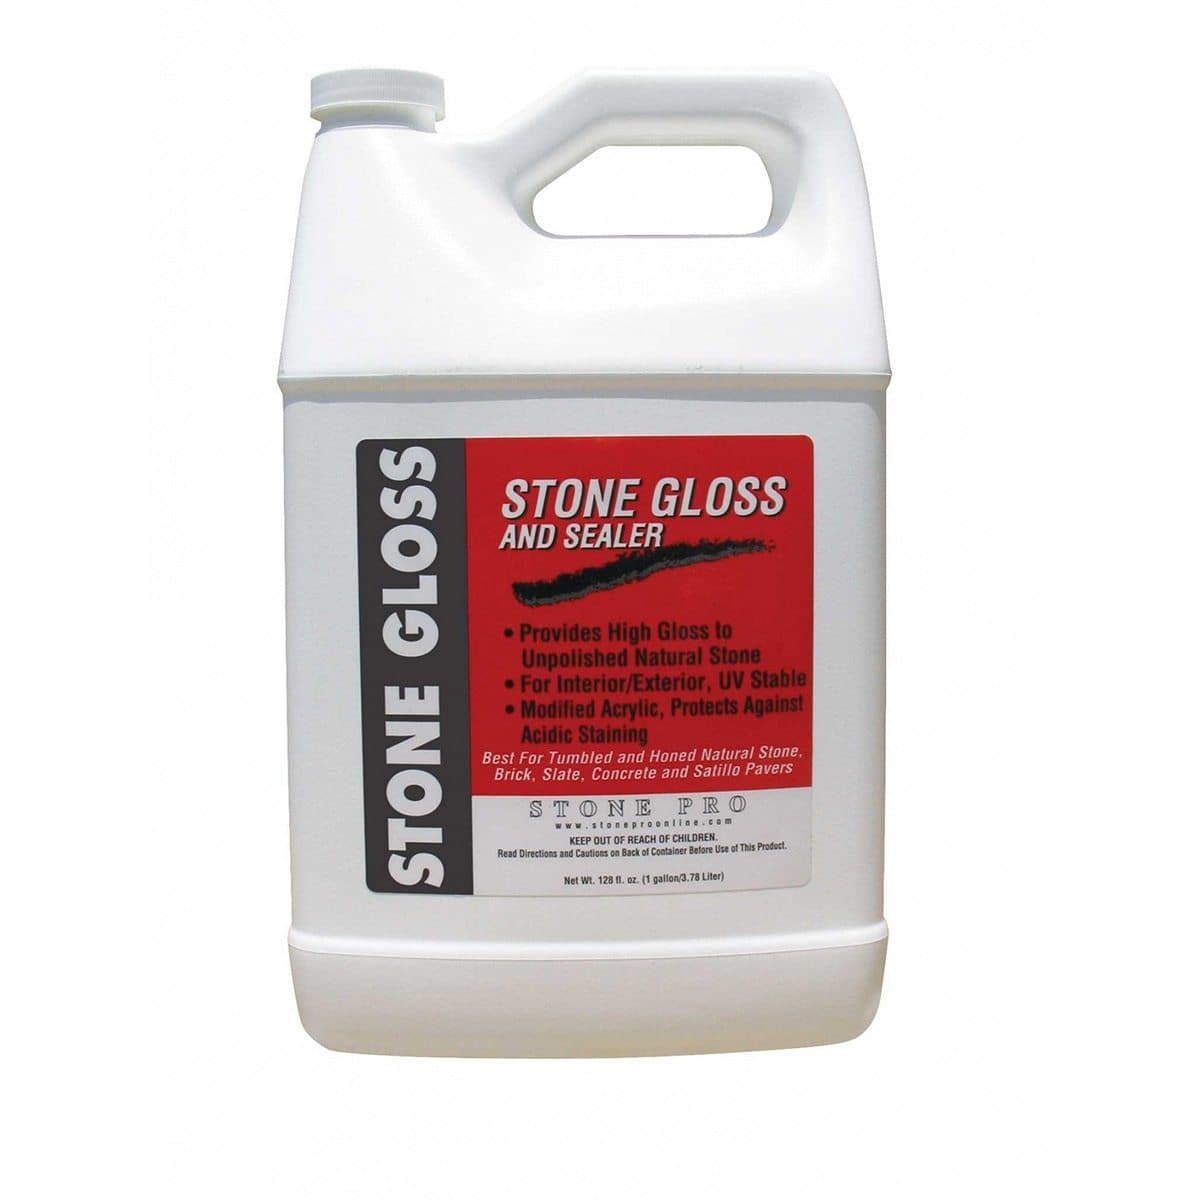 Stone Gloss Topical Sealer (High Gloss) - Stone Pro